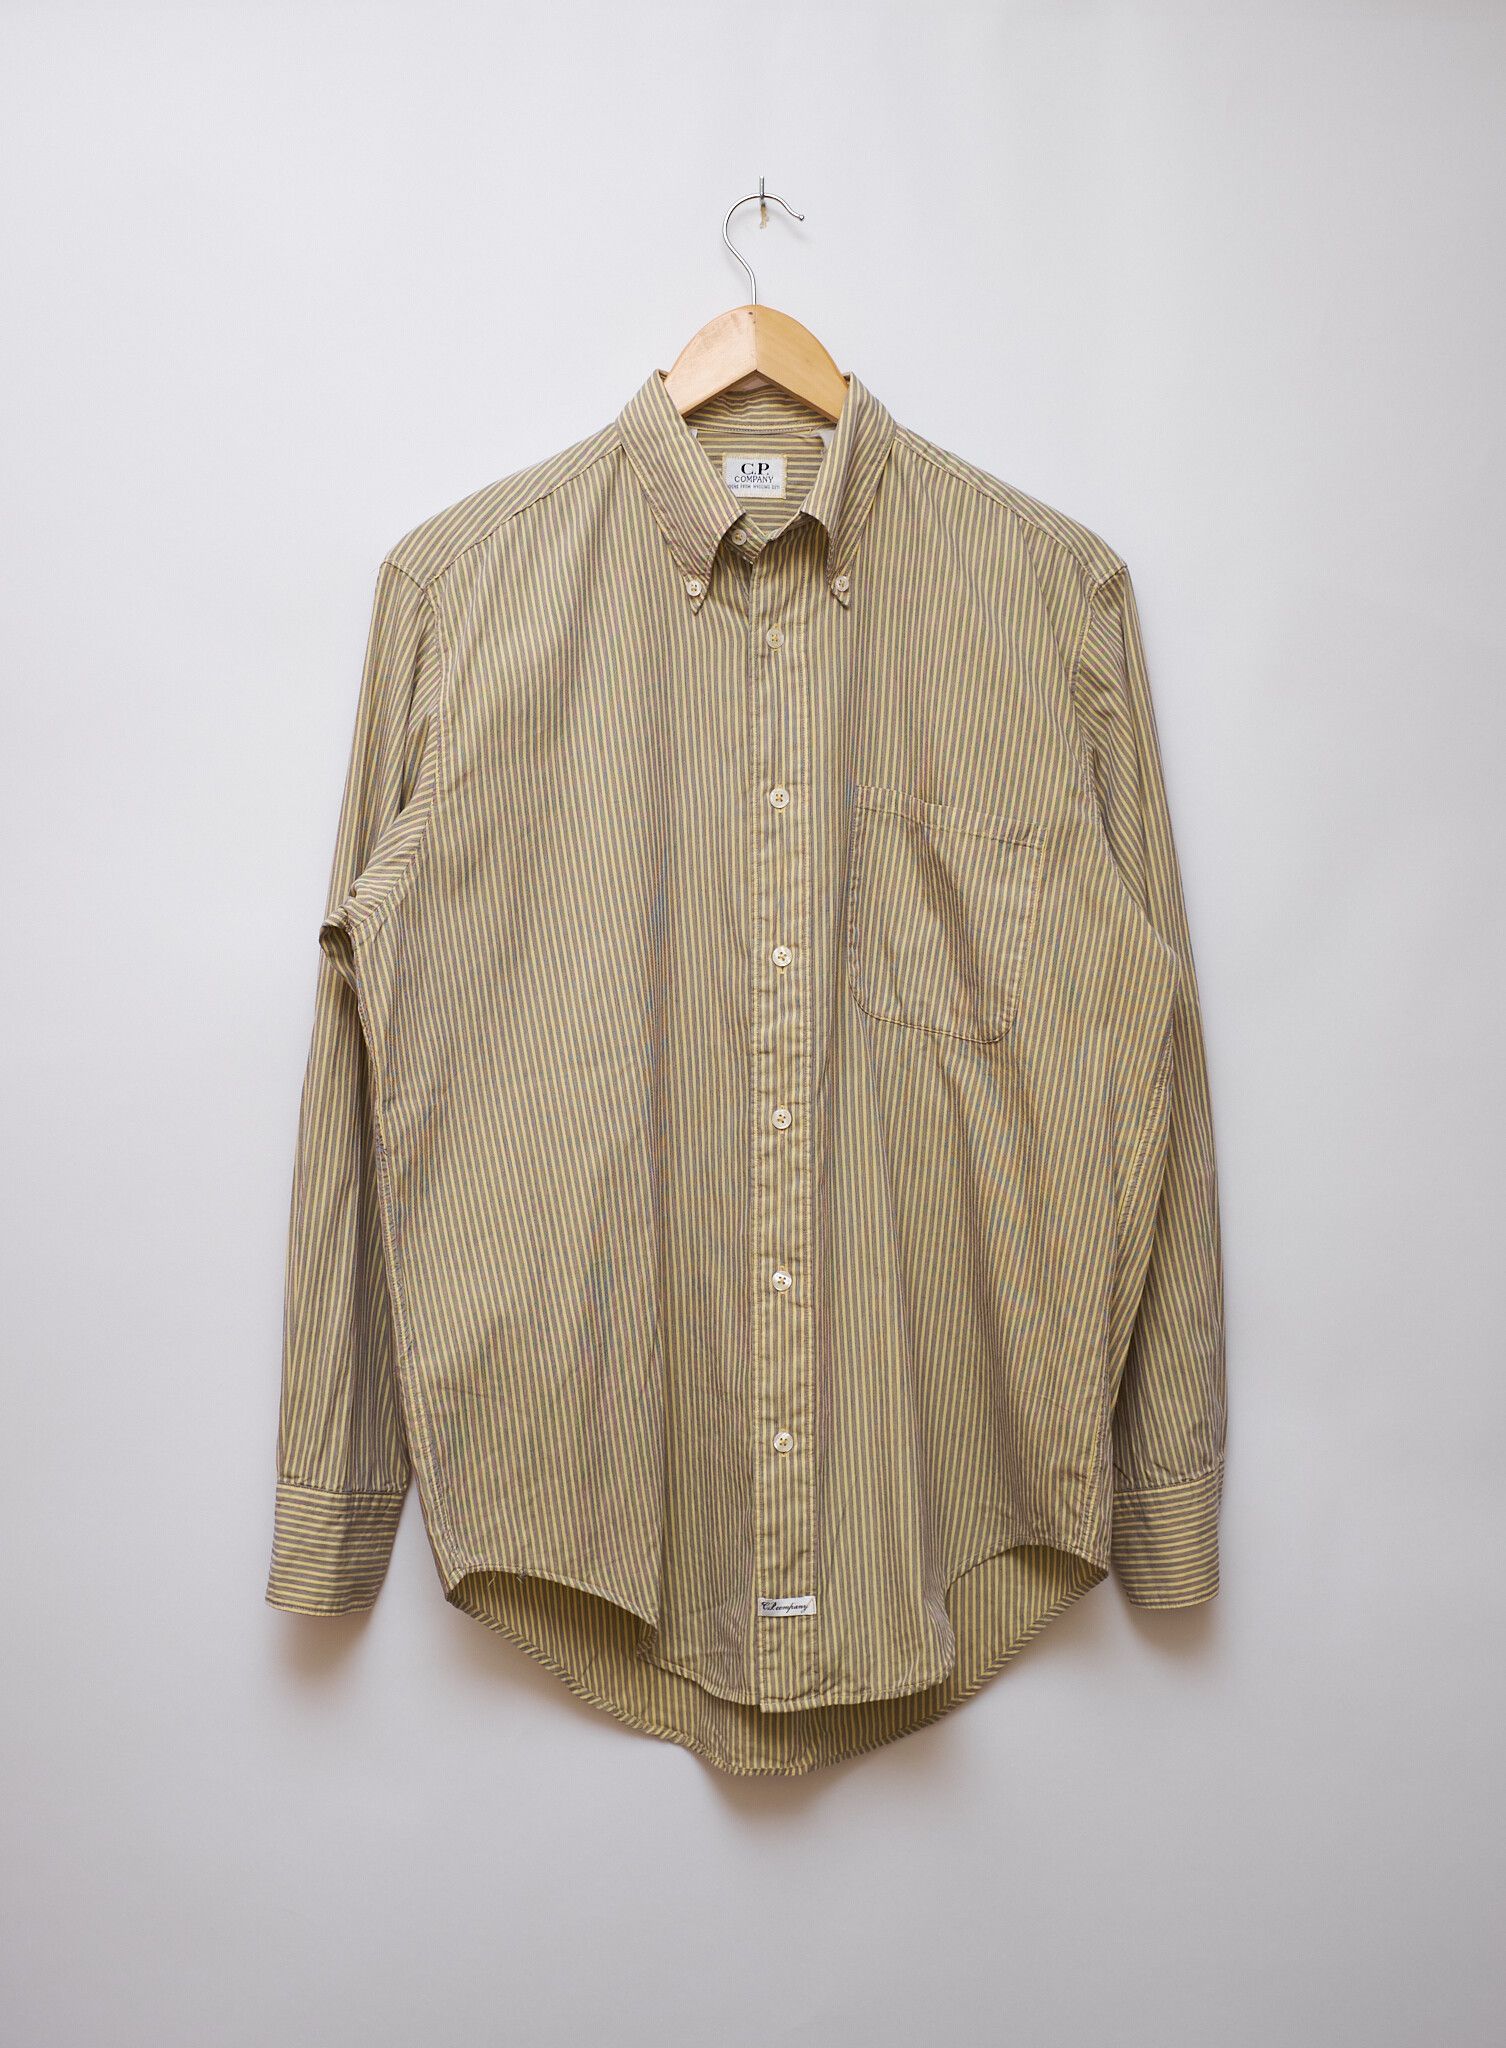 Stone Island Vintage СP Company Shirt 1980 | Grailed